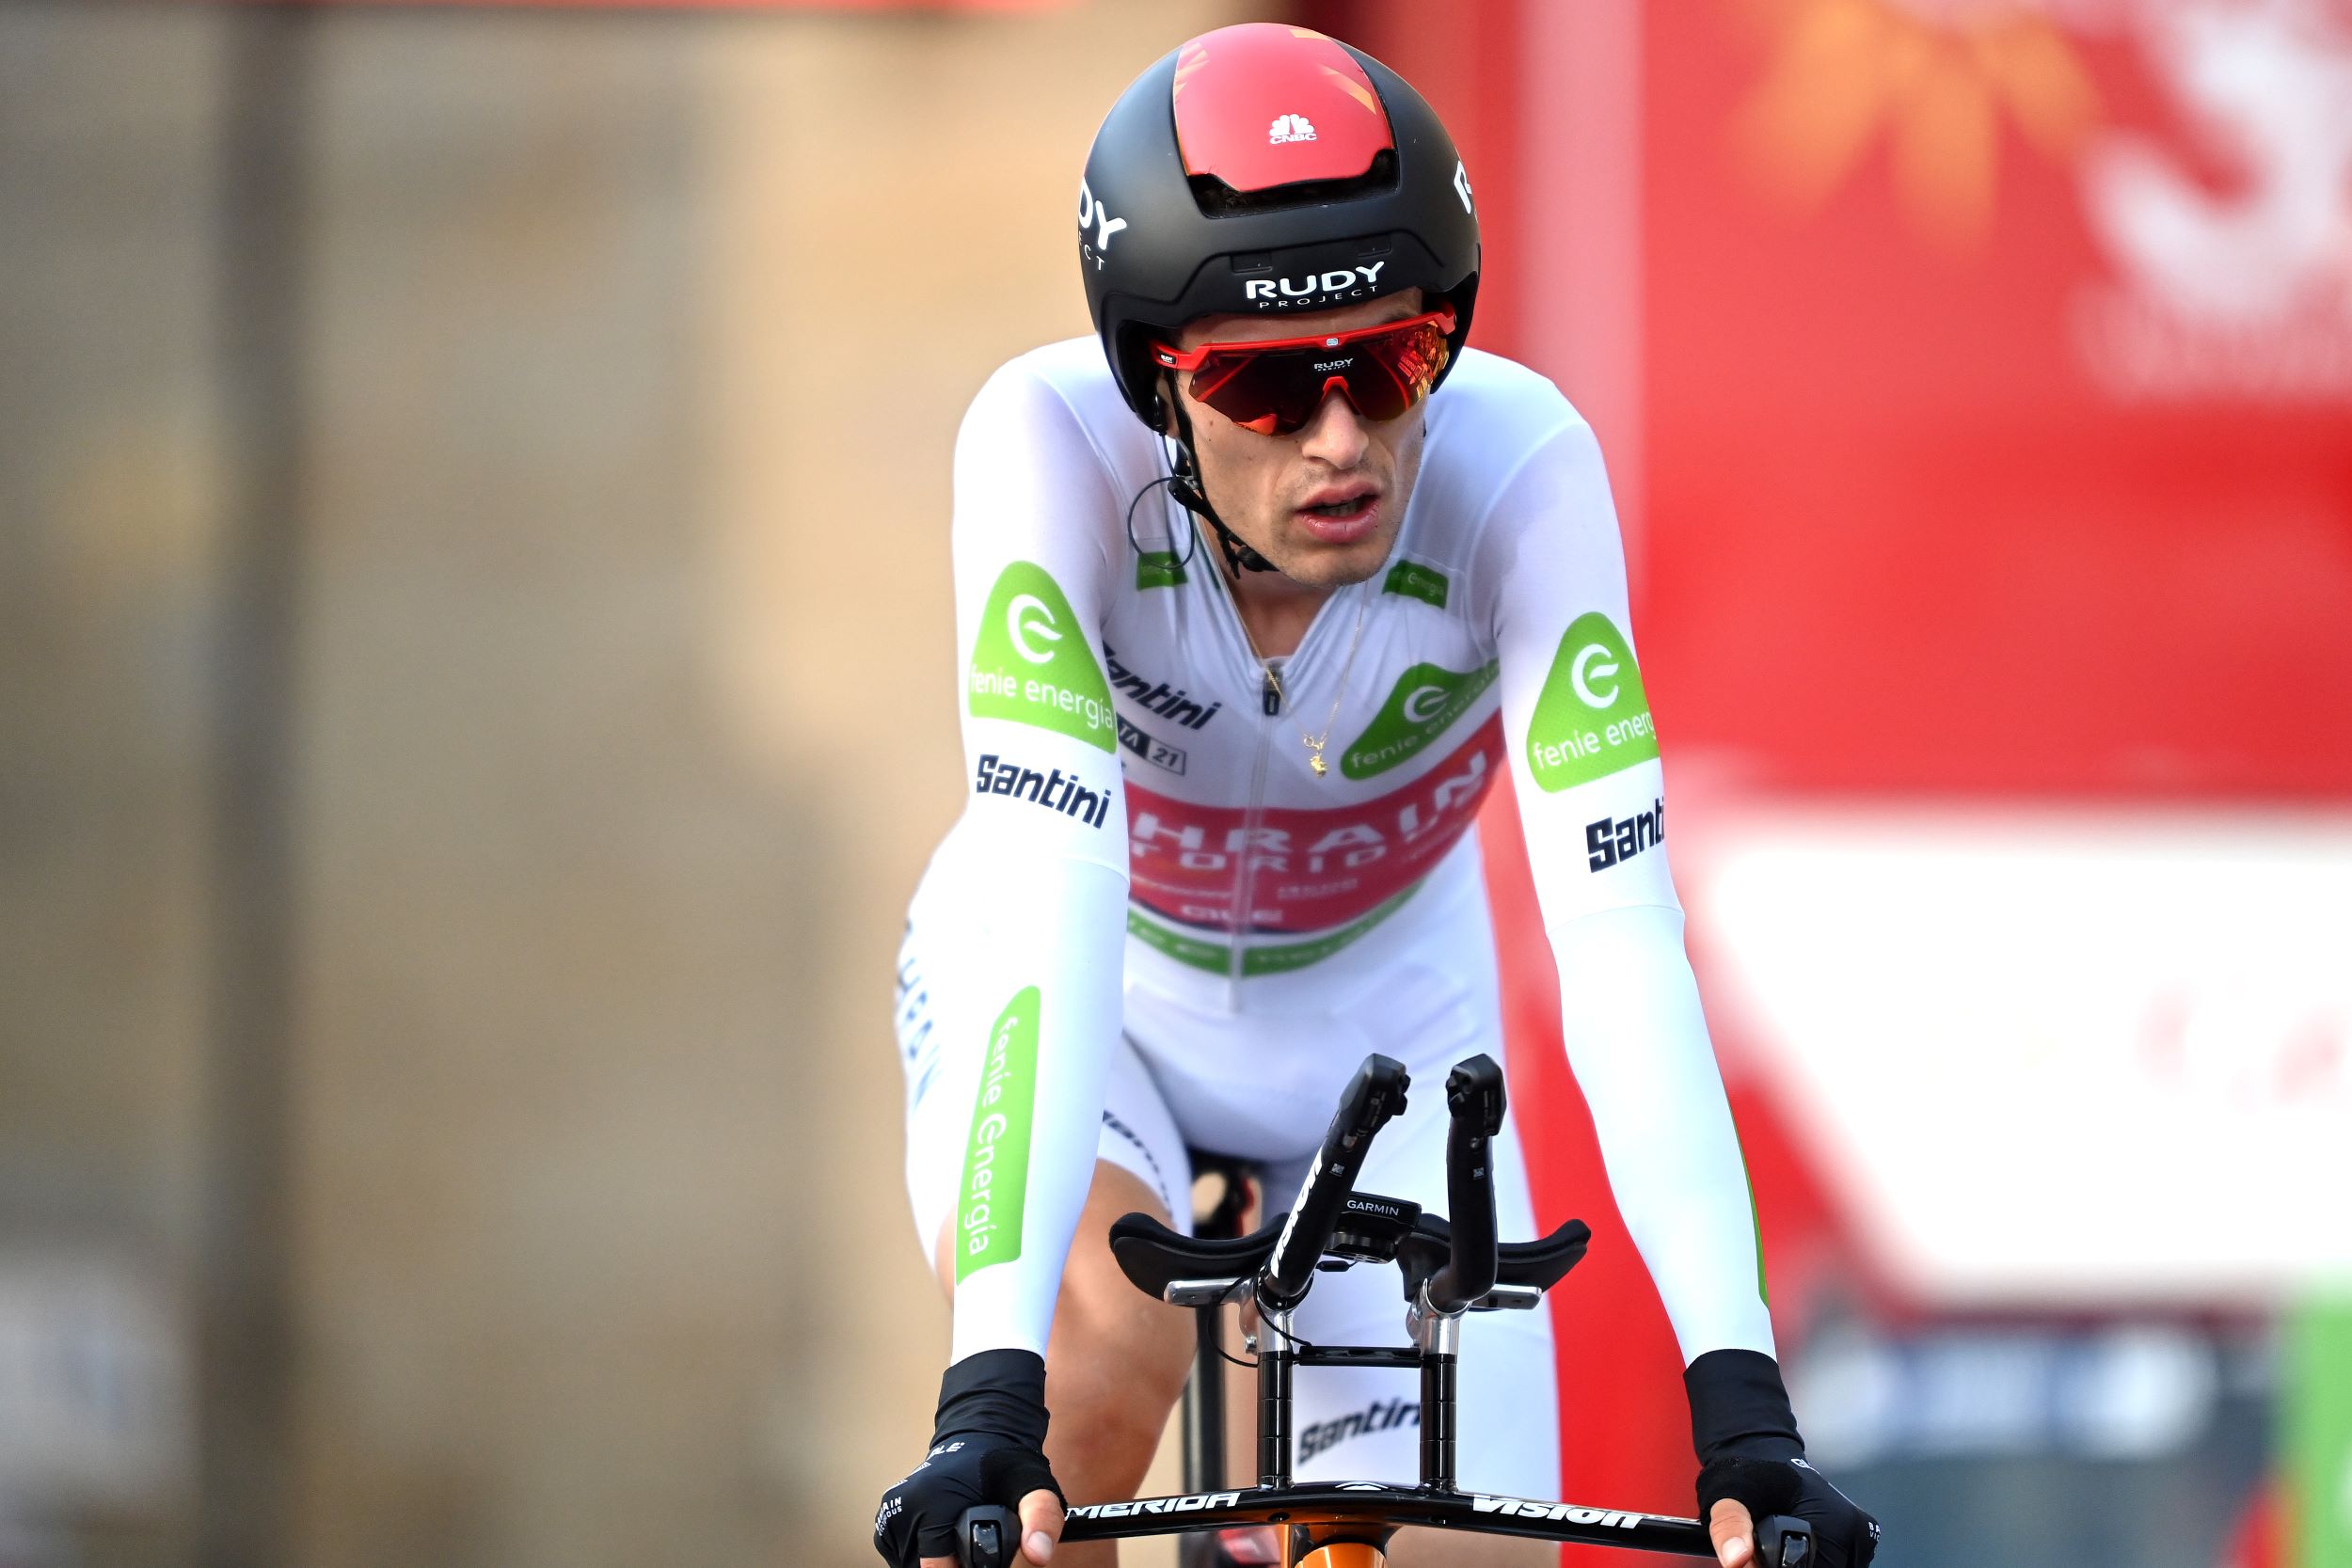 Gino Mäder dona £ 4000 a la caridad después de comprometerse a donar por cada ciclista que venció en la Vuelta a España